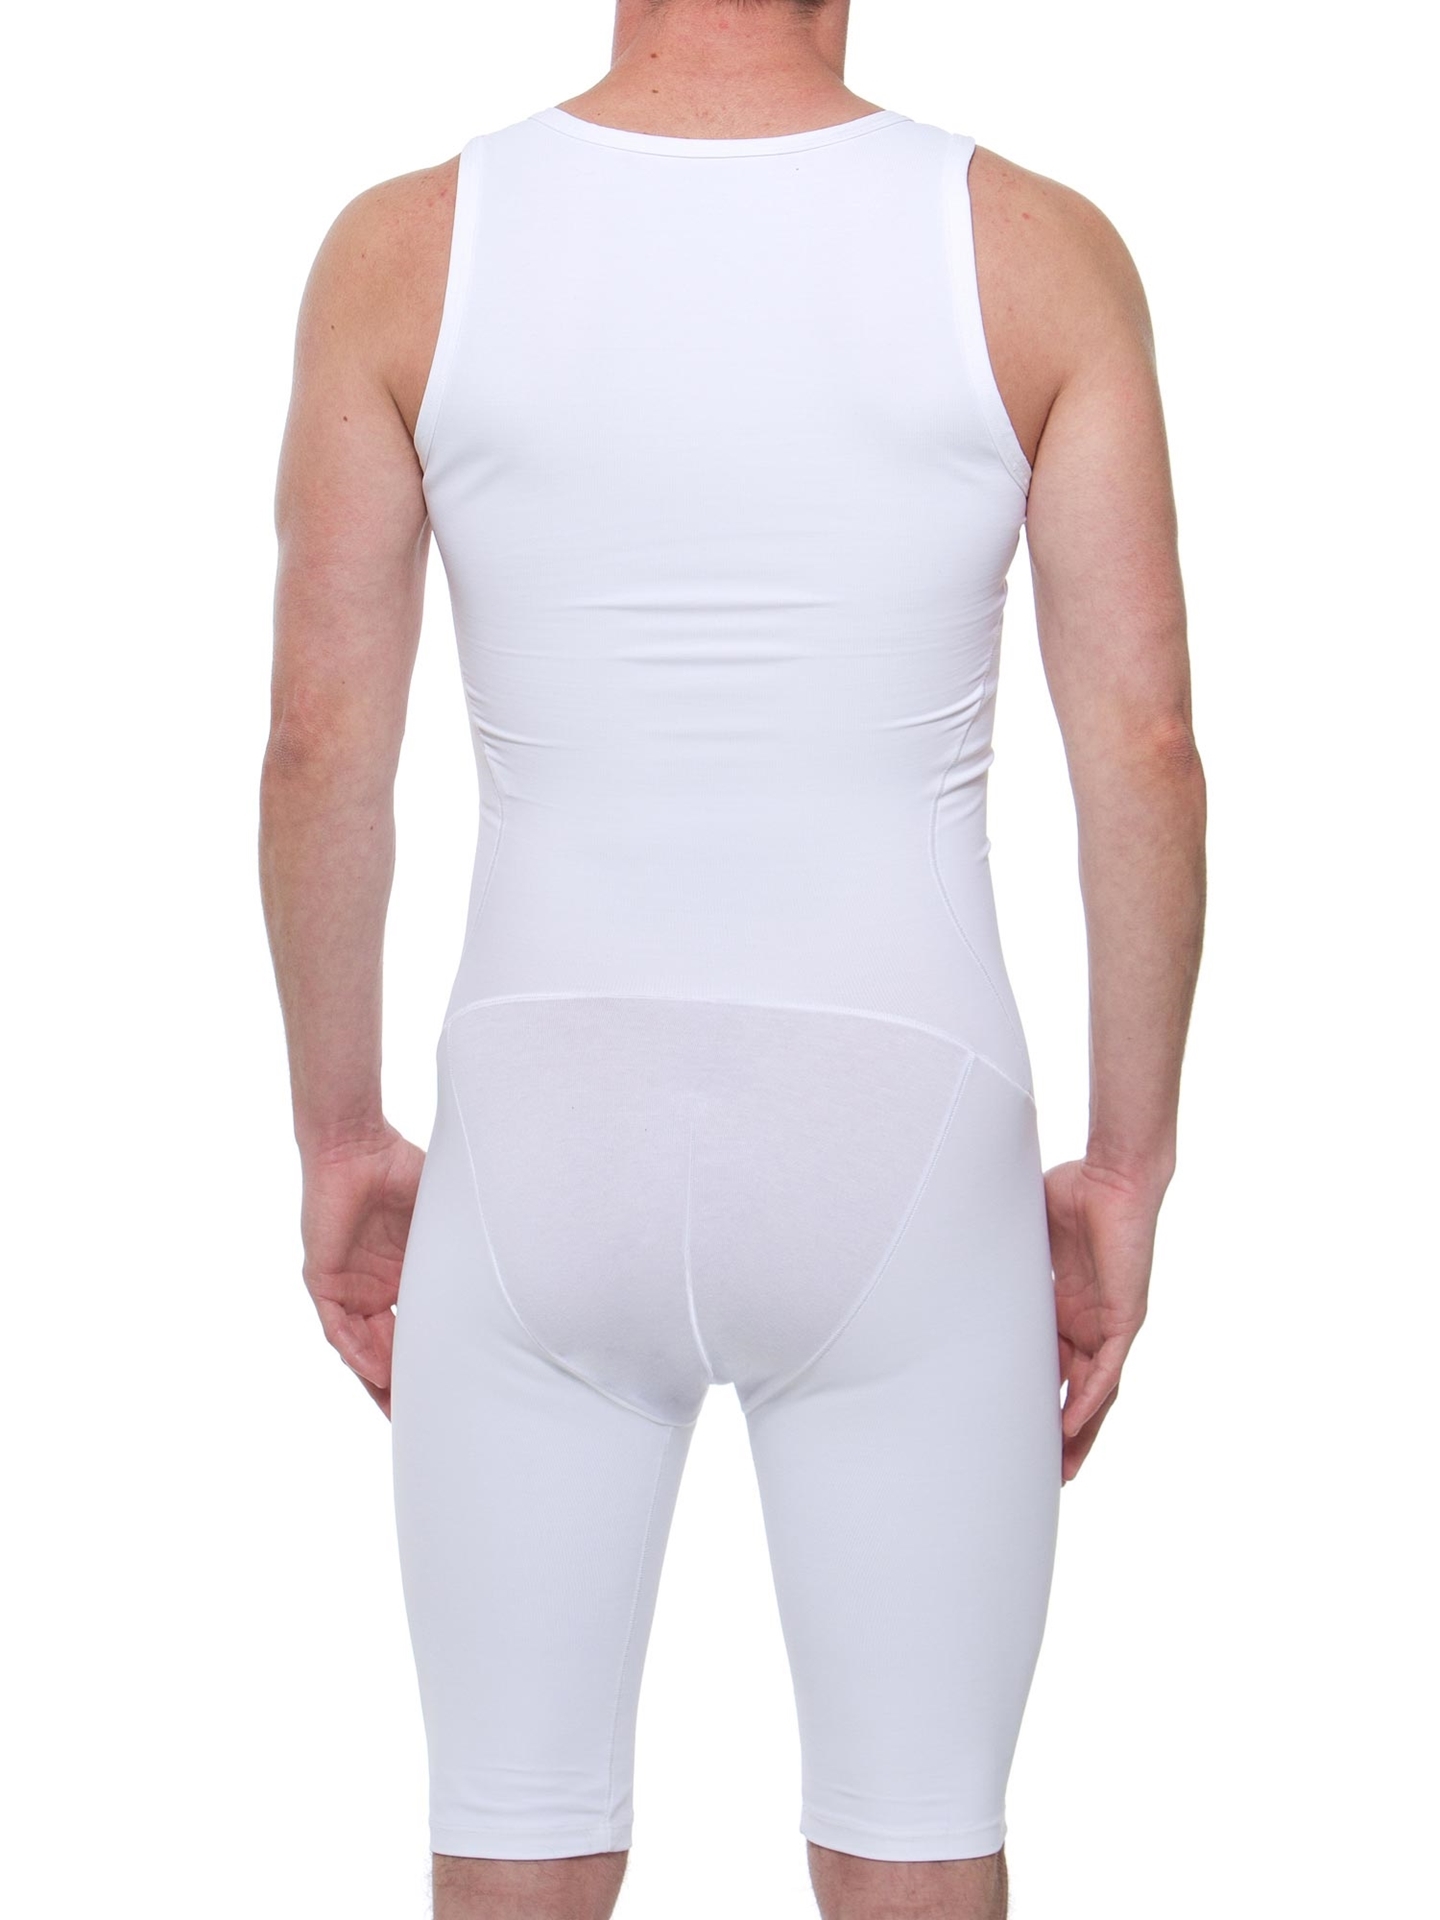 Underworks Men Compression Bodysuit with Rear Zipper 